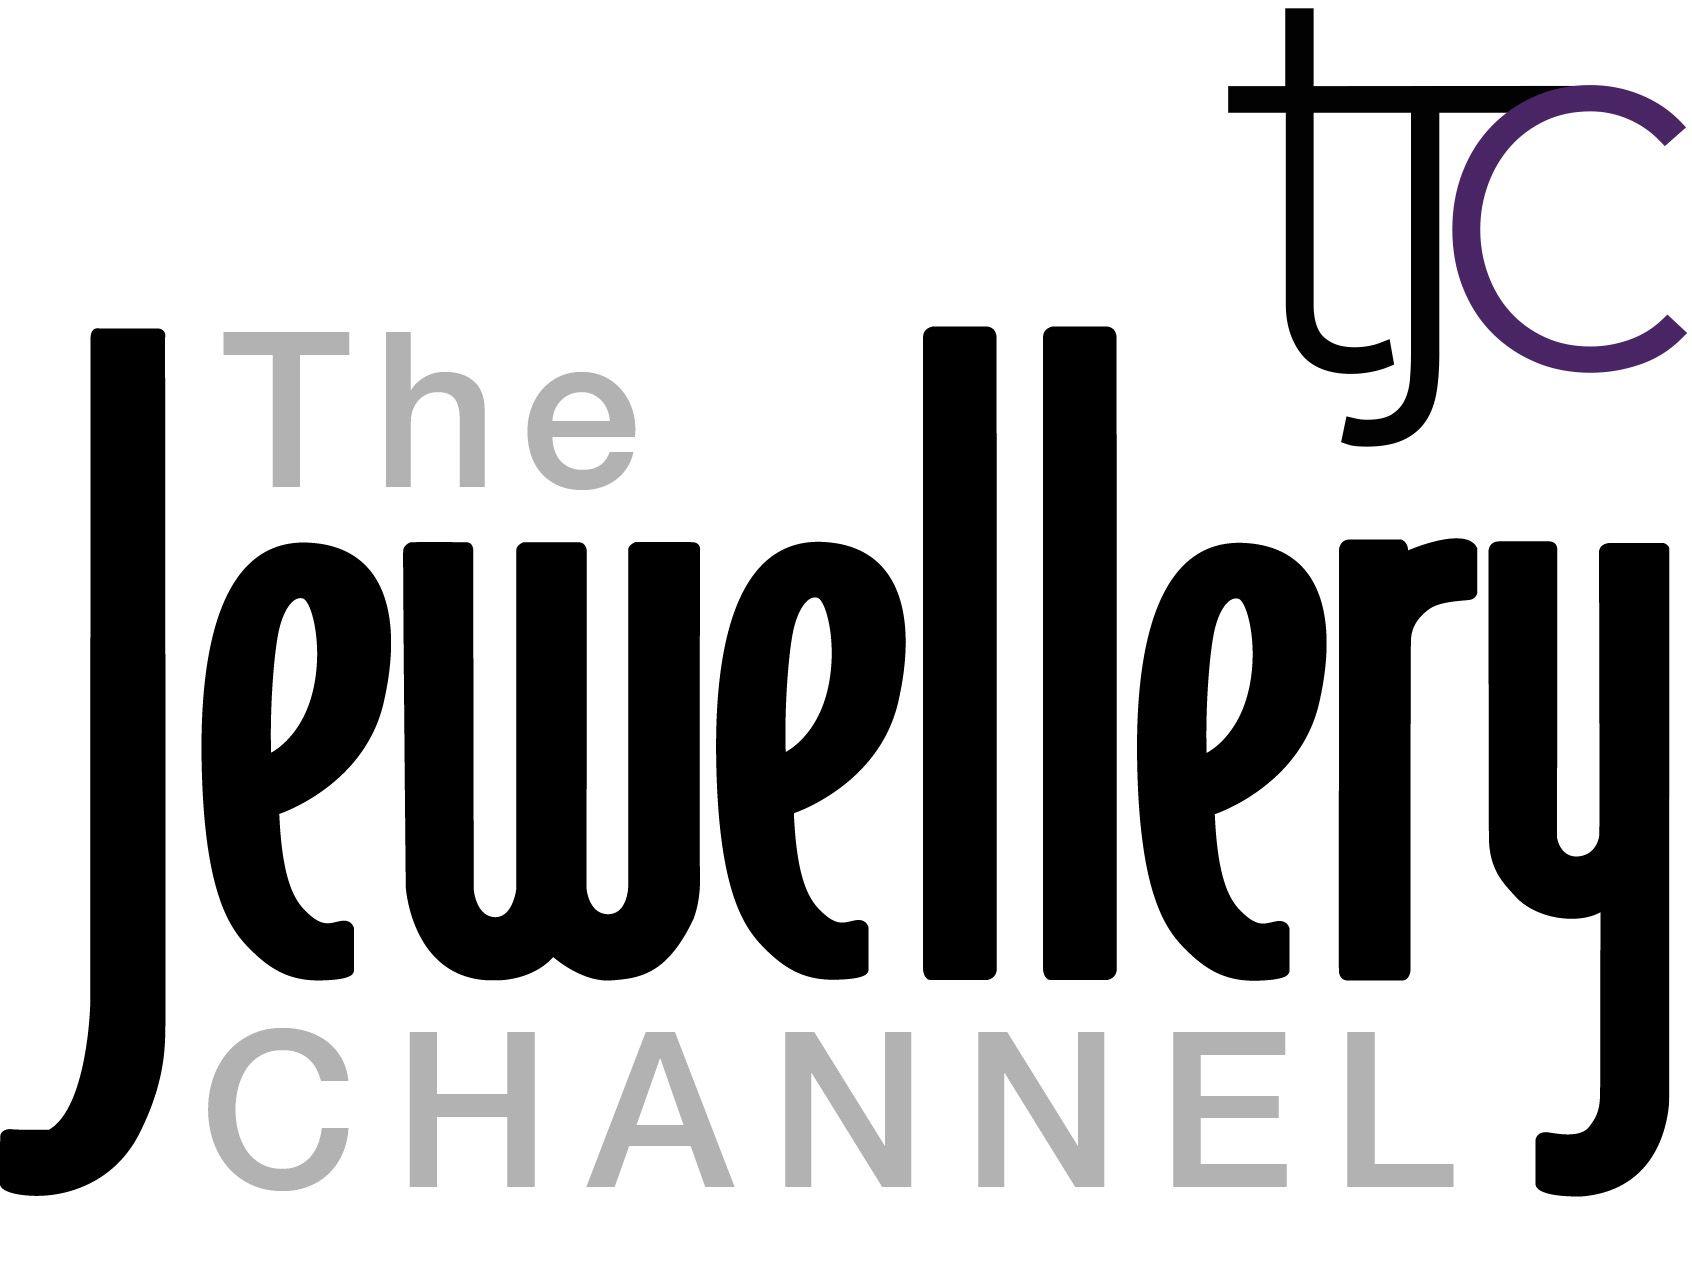 TJC Logo - File:TJC Logo.jpg - Wikimedia Commons